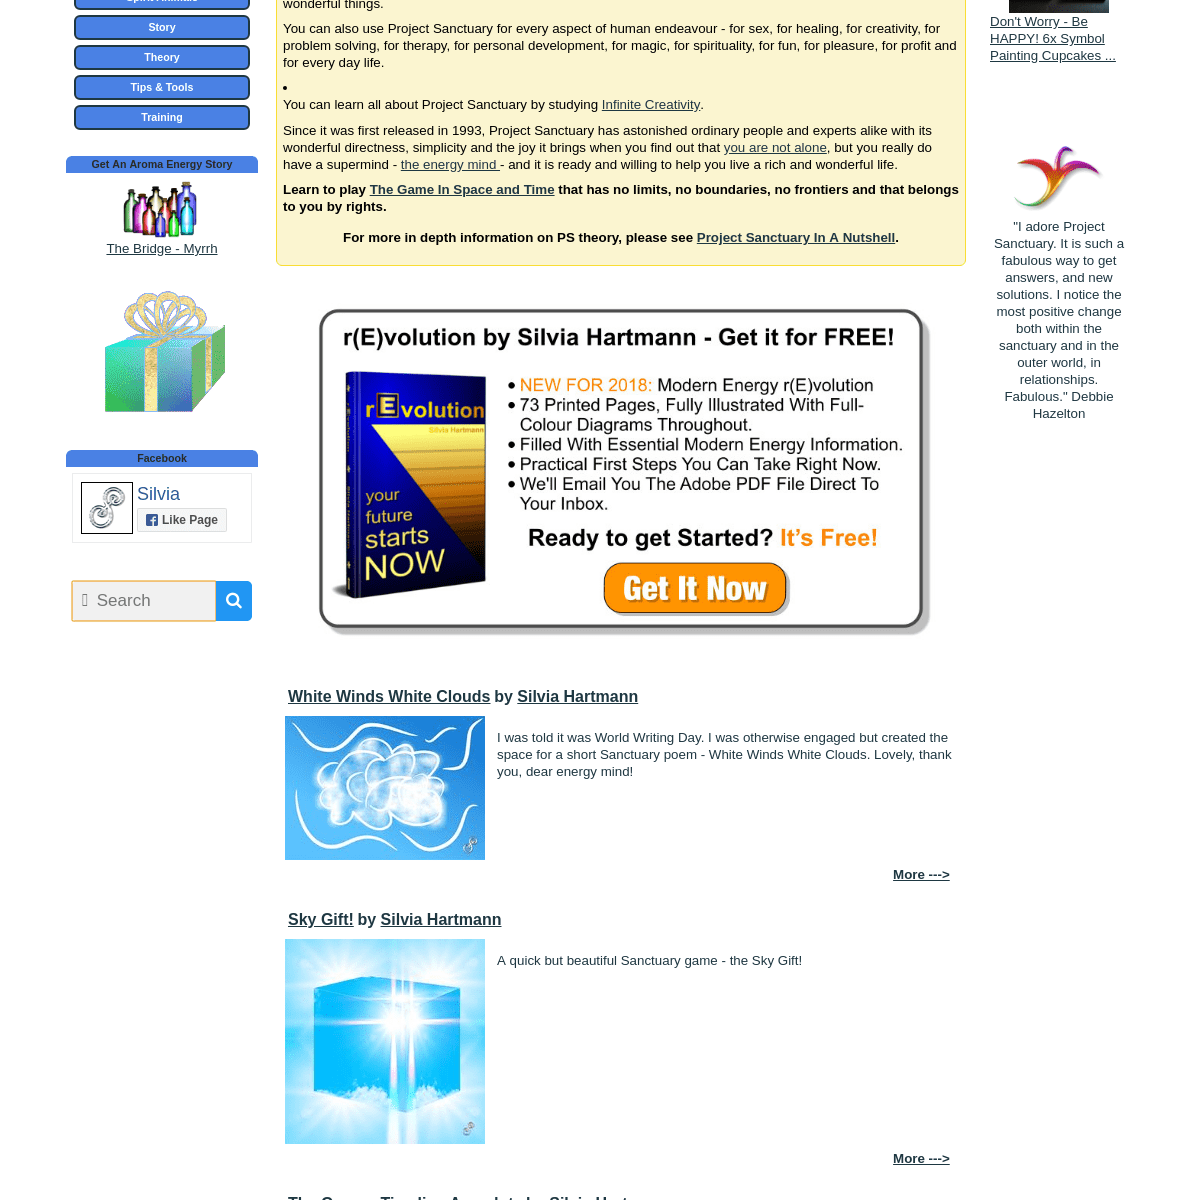 A complete backup of projectsanctuary.com